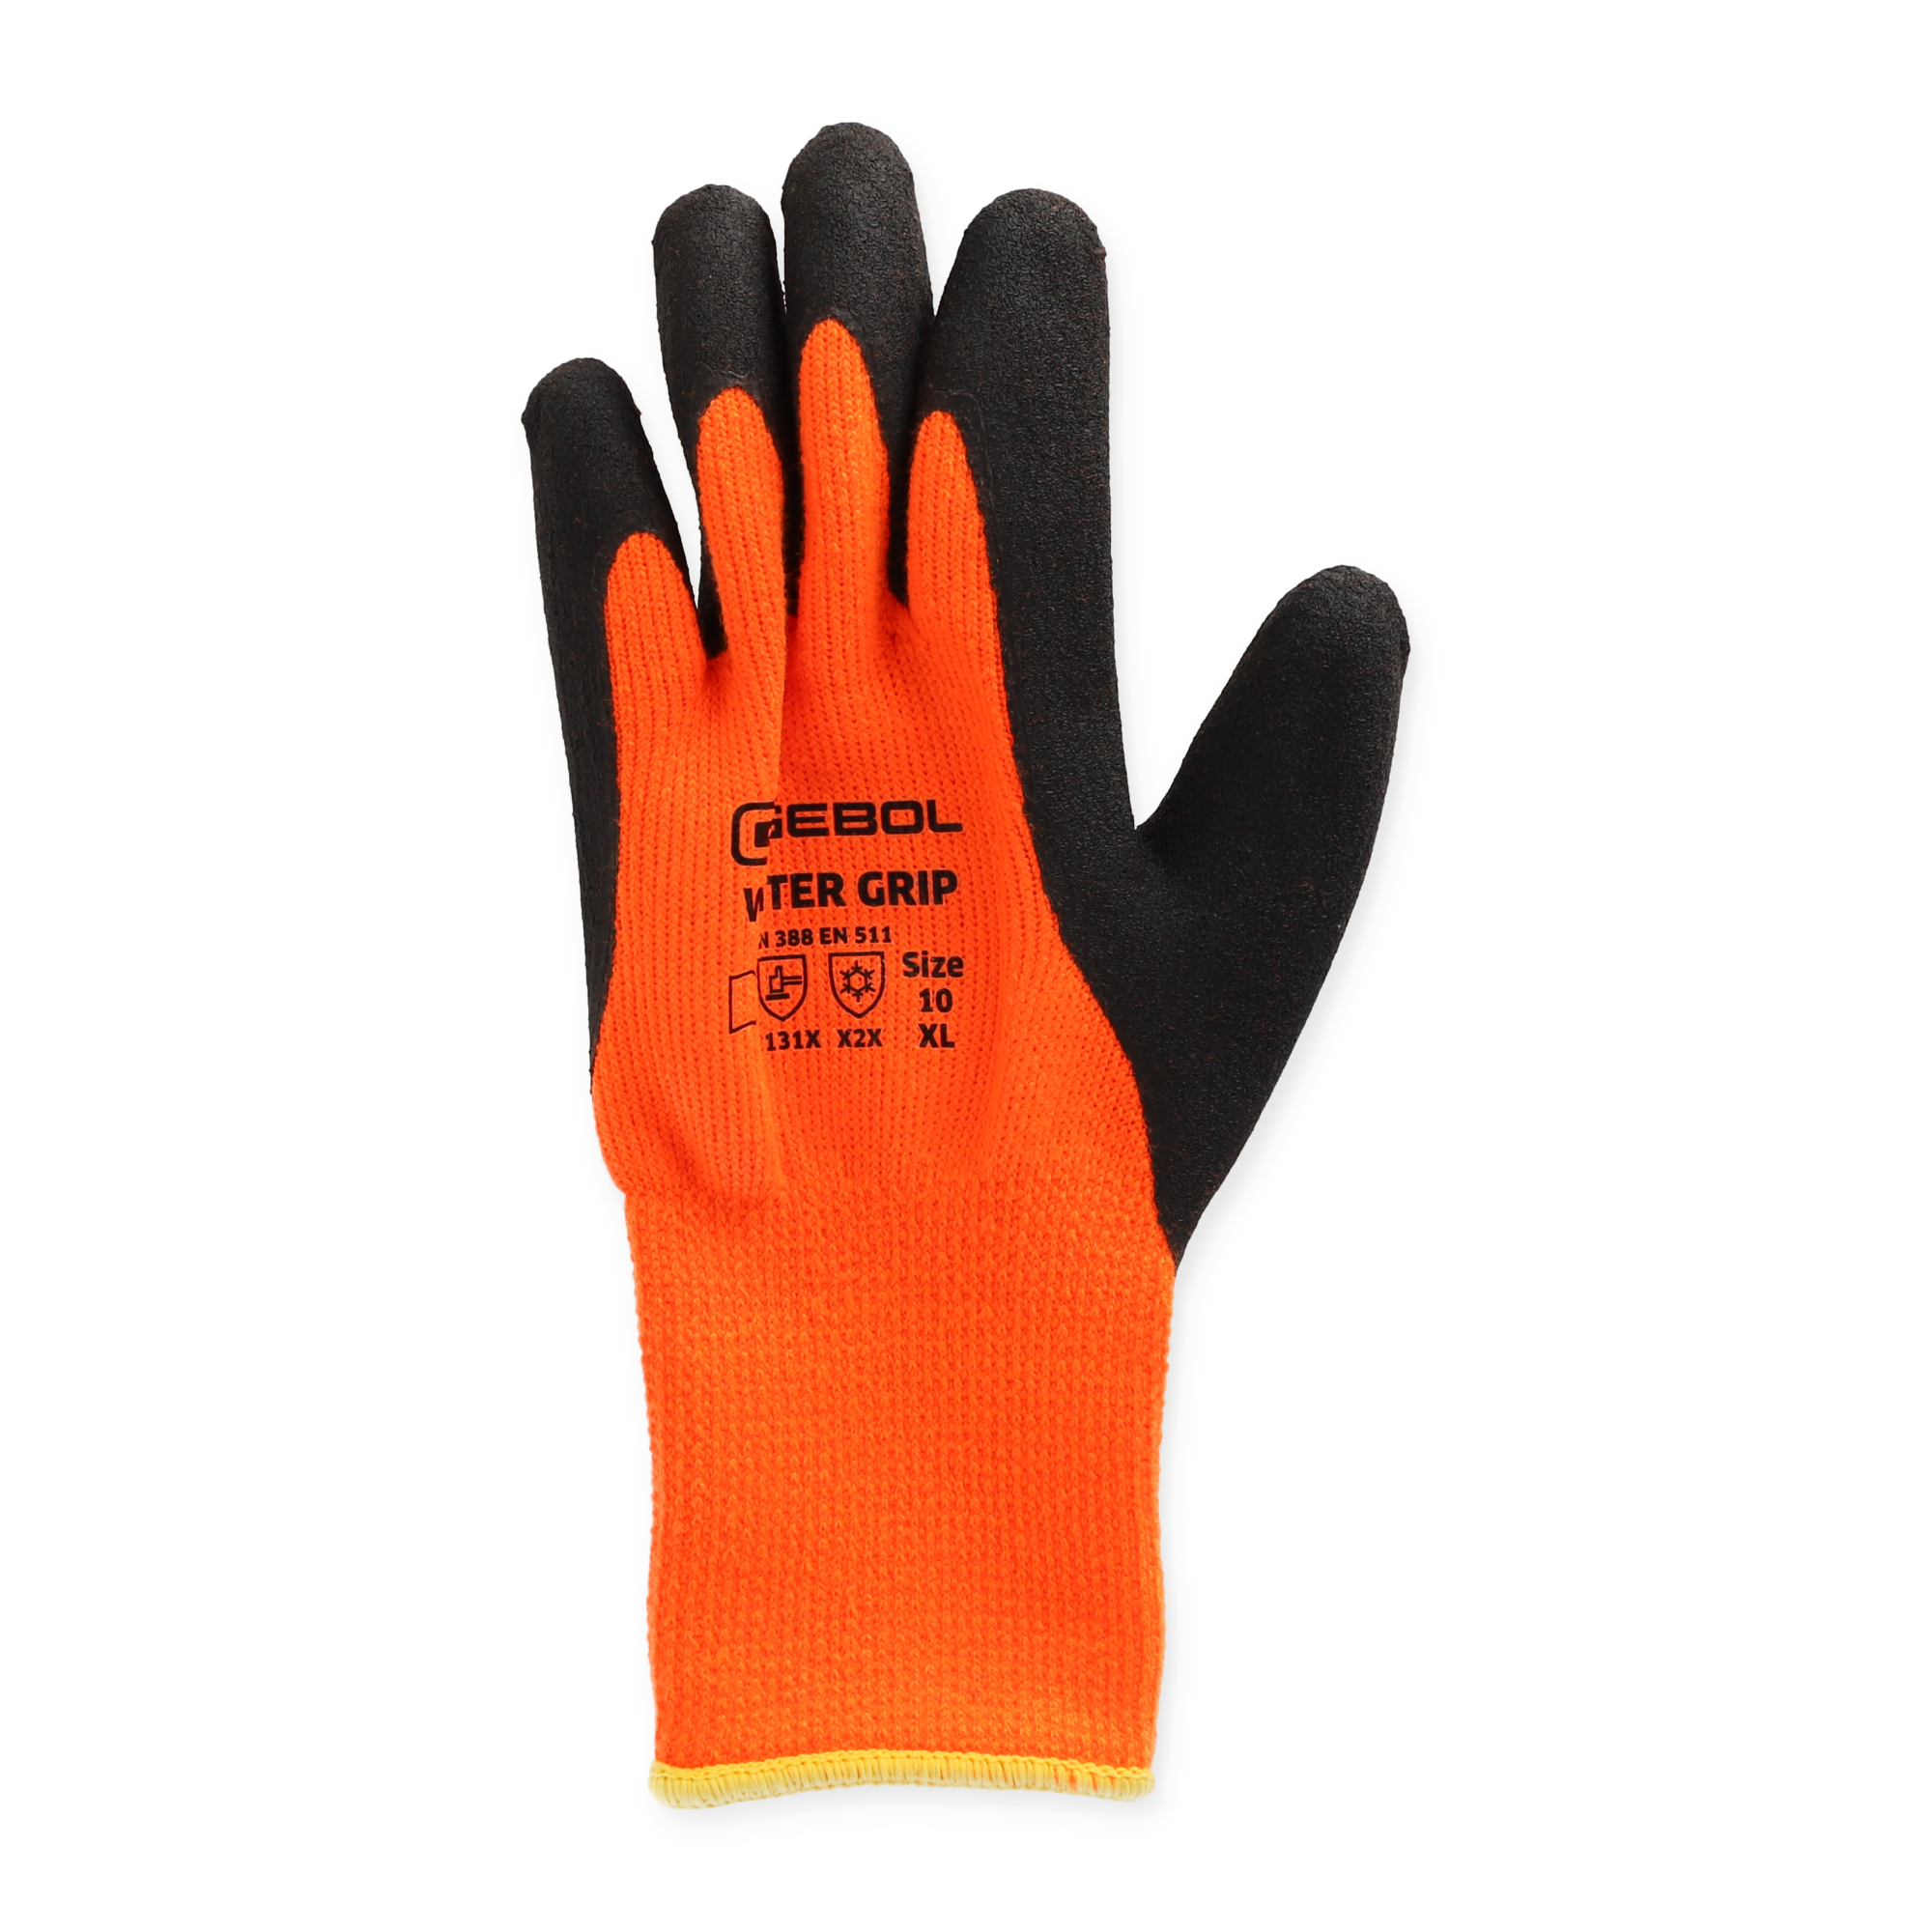 Handschuhe 'Winter Grip' orange Gr. 10 + product picture